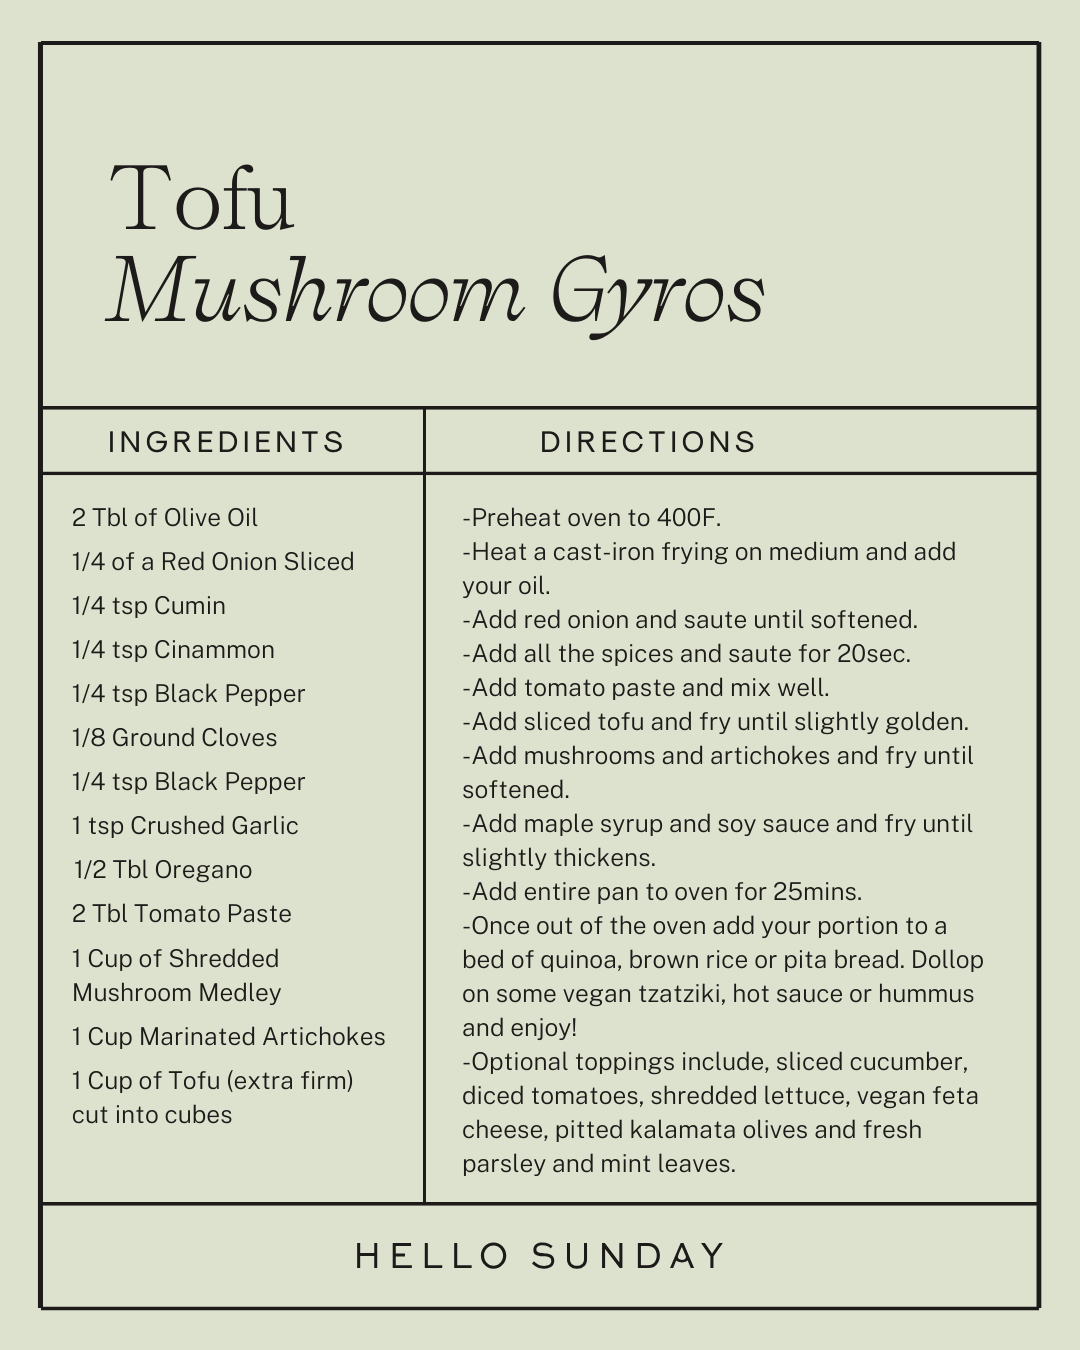 Tofu mushroom gyros recipe card